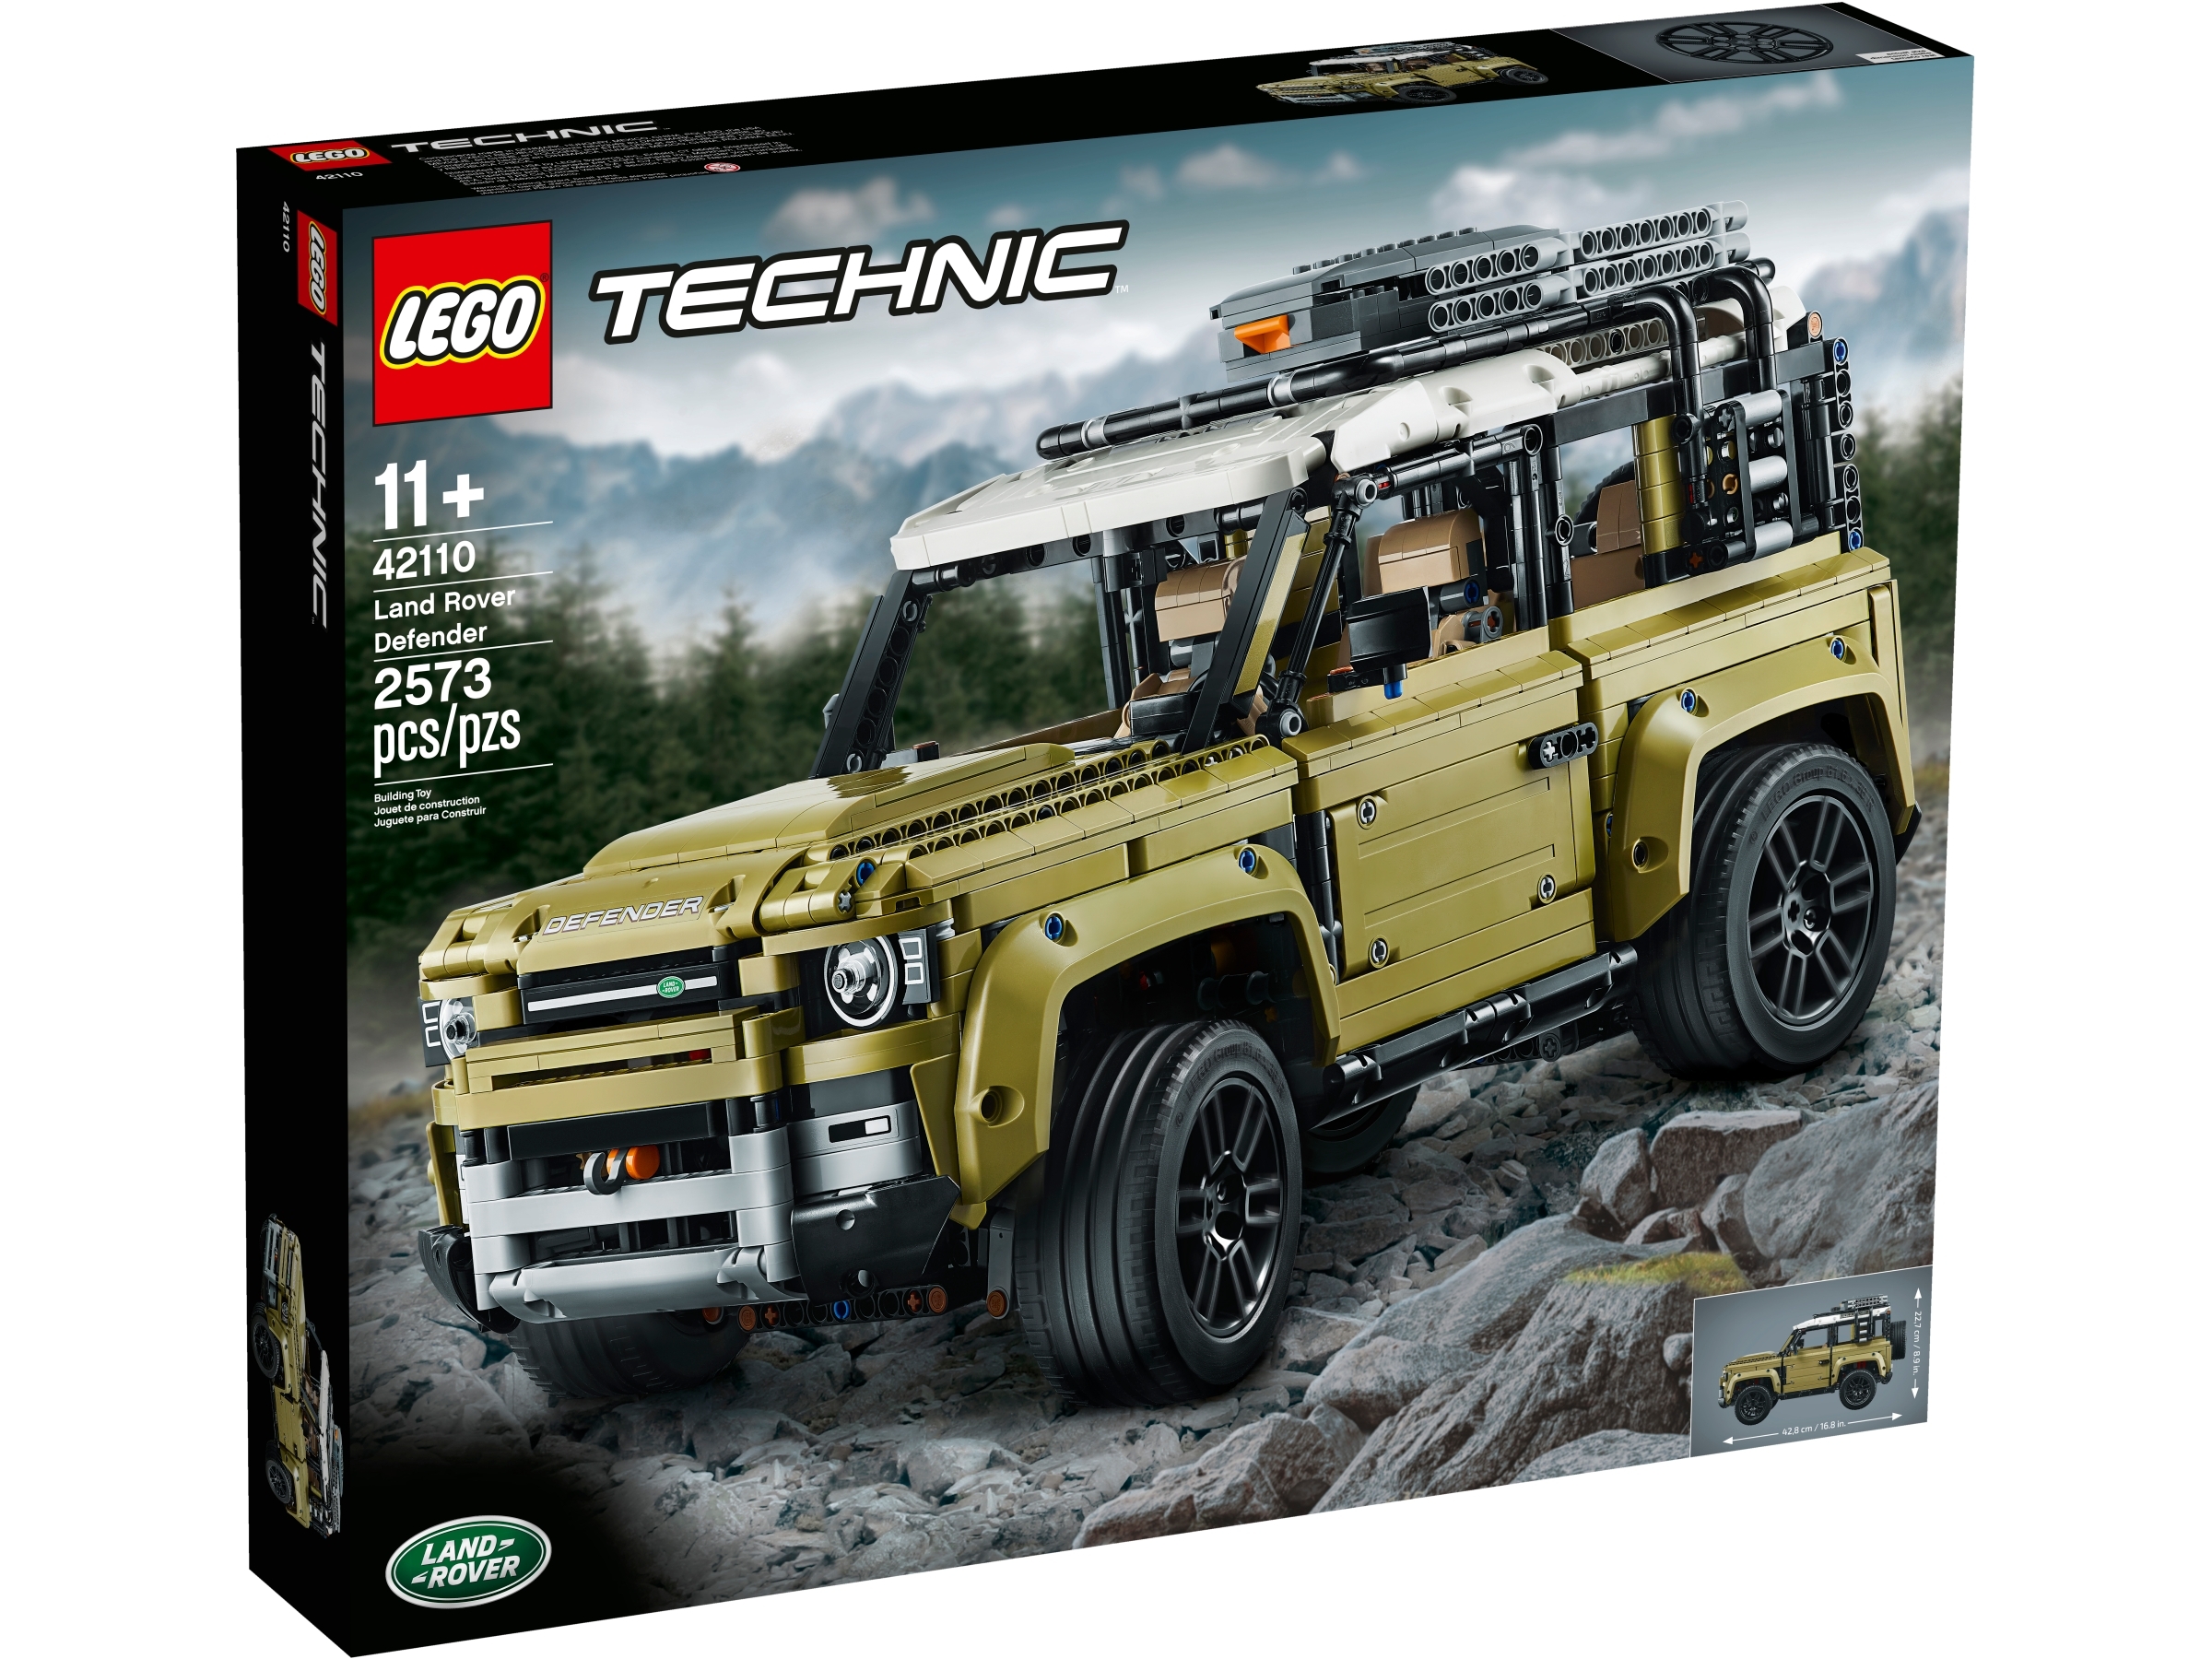 Lego Technic Land Rover Defender Coche Modelo de coleccionista 42110-Nuevo